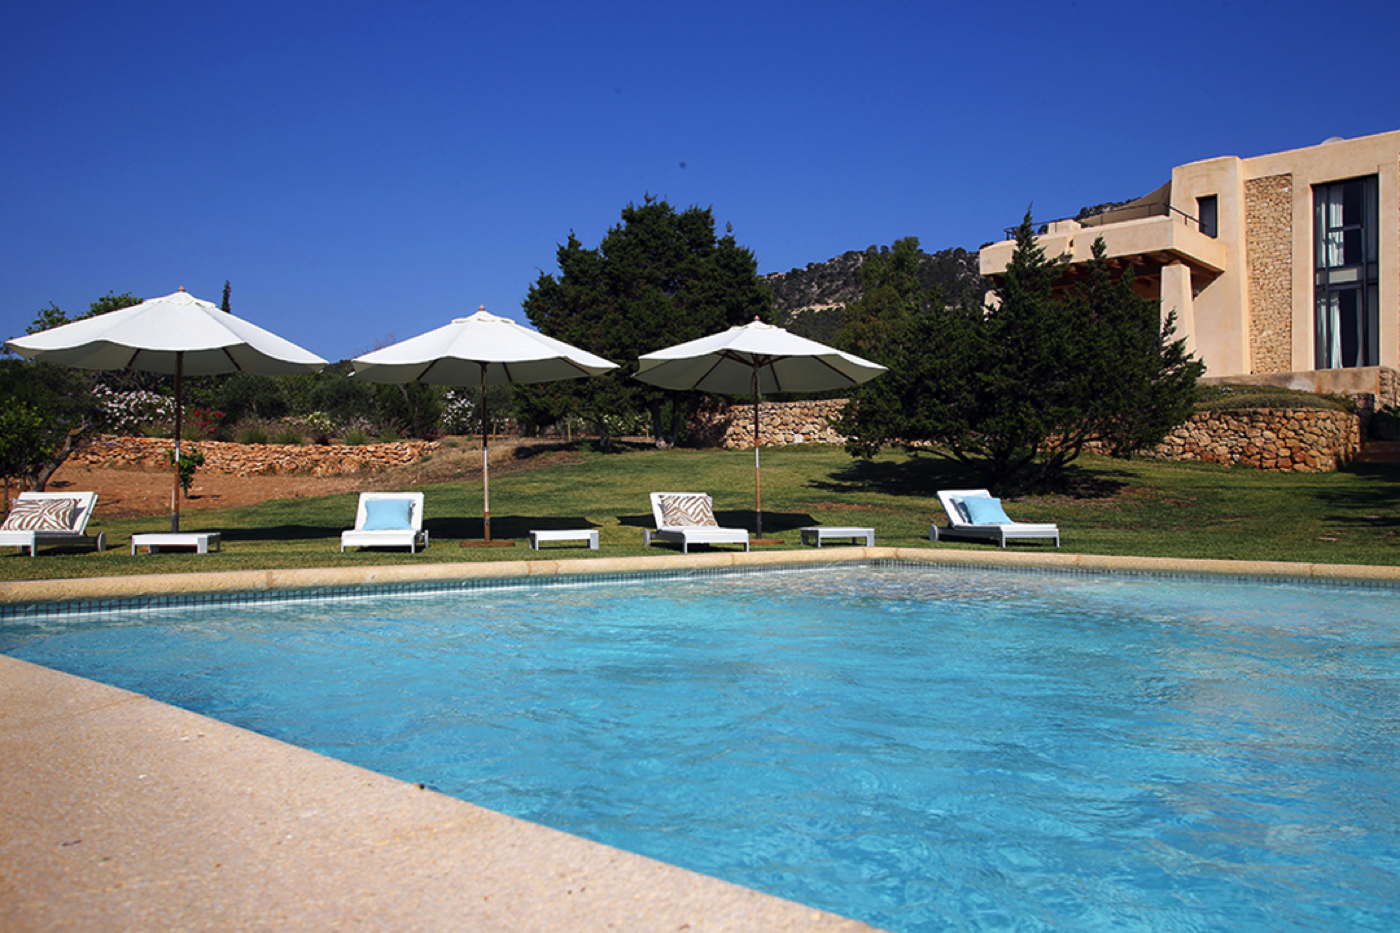 Design Villa Can Teresita in Ibiza - DOMIZILE REISEN